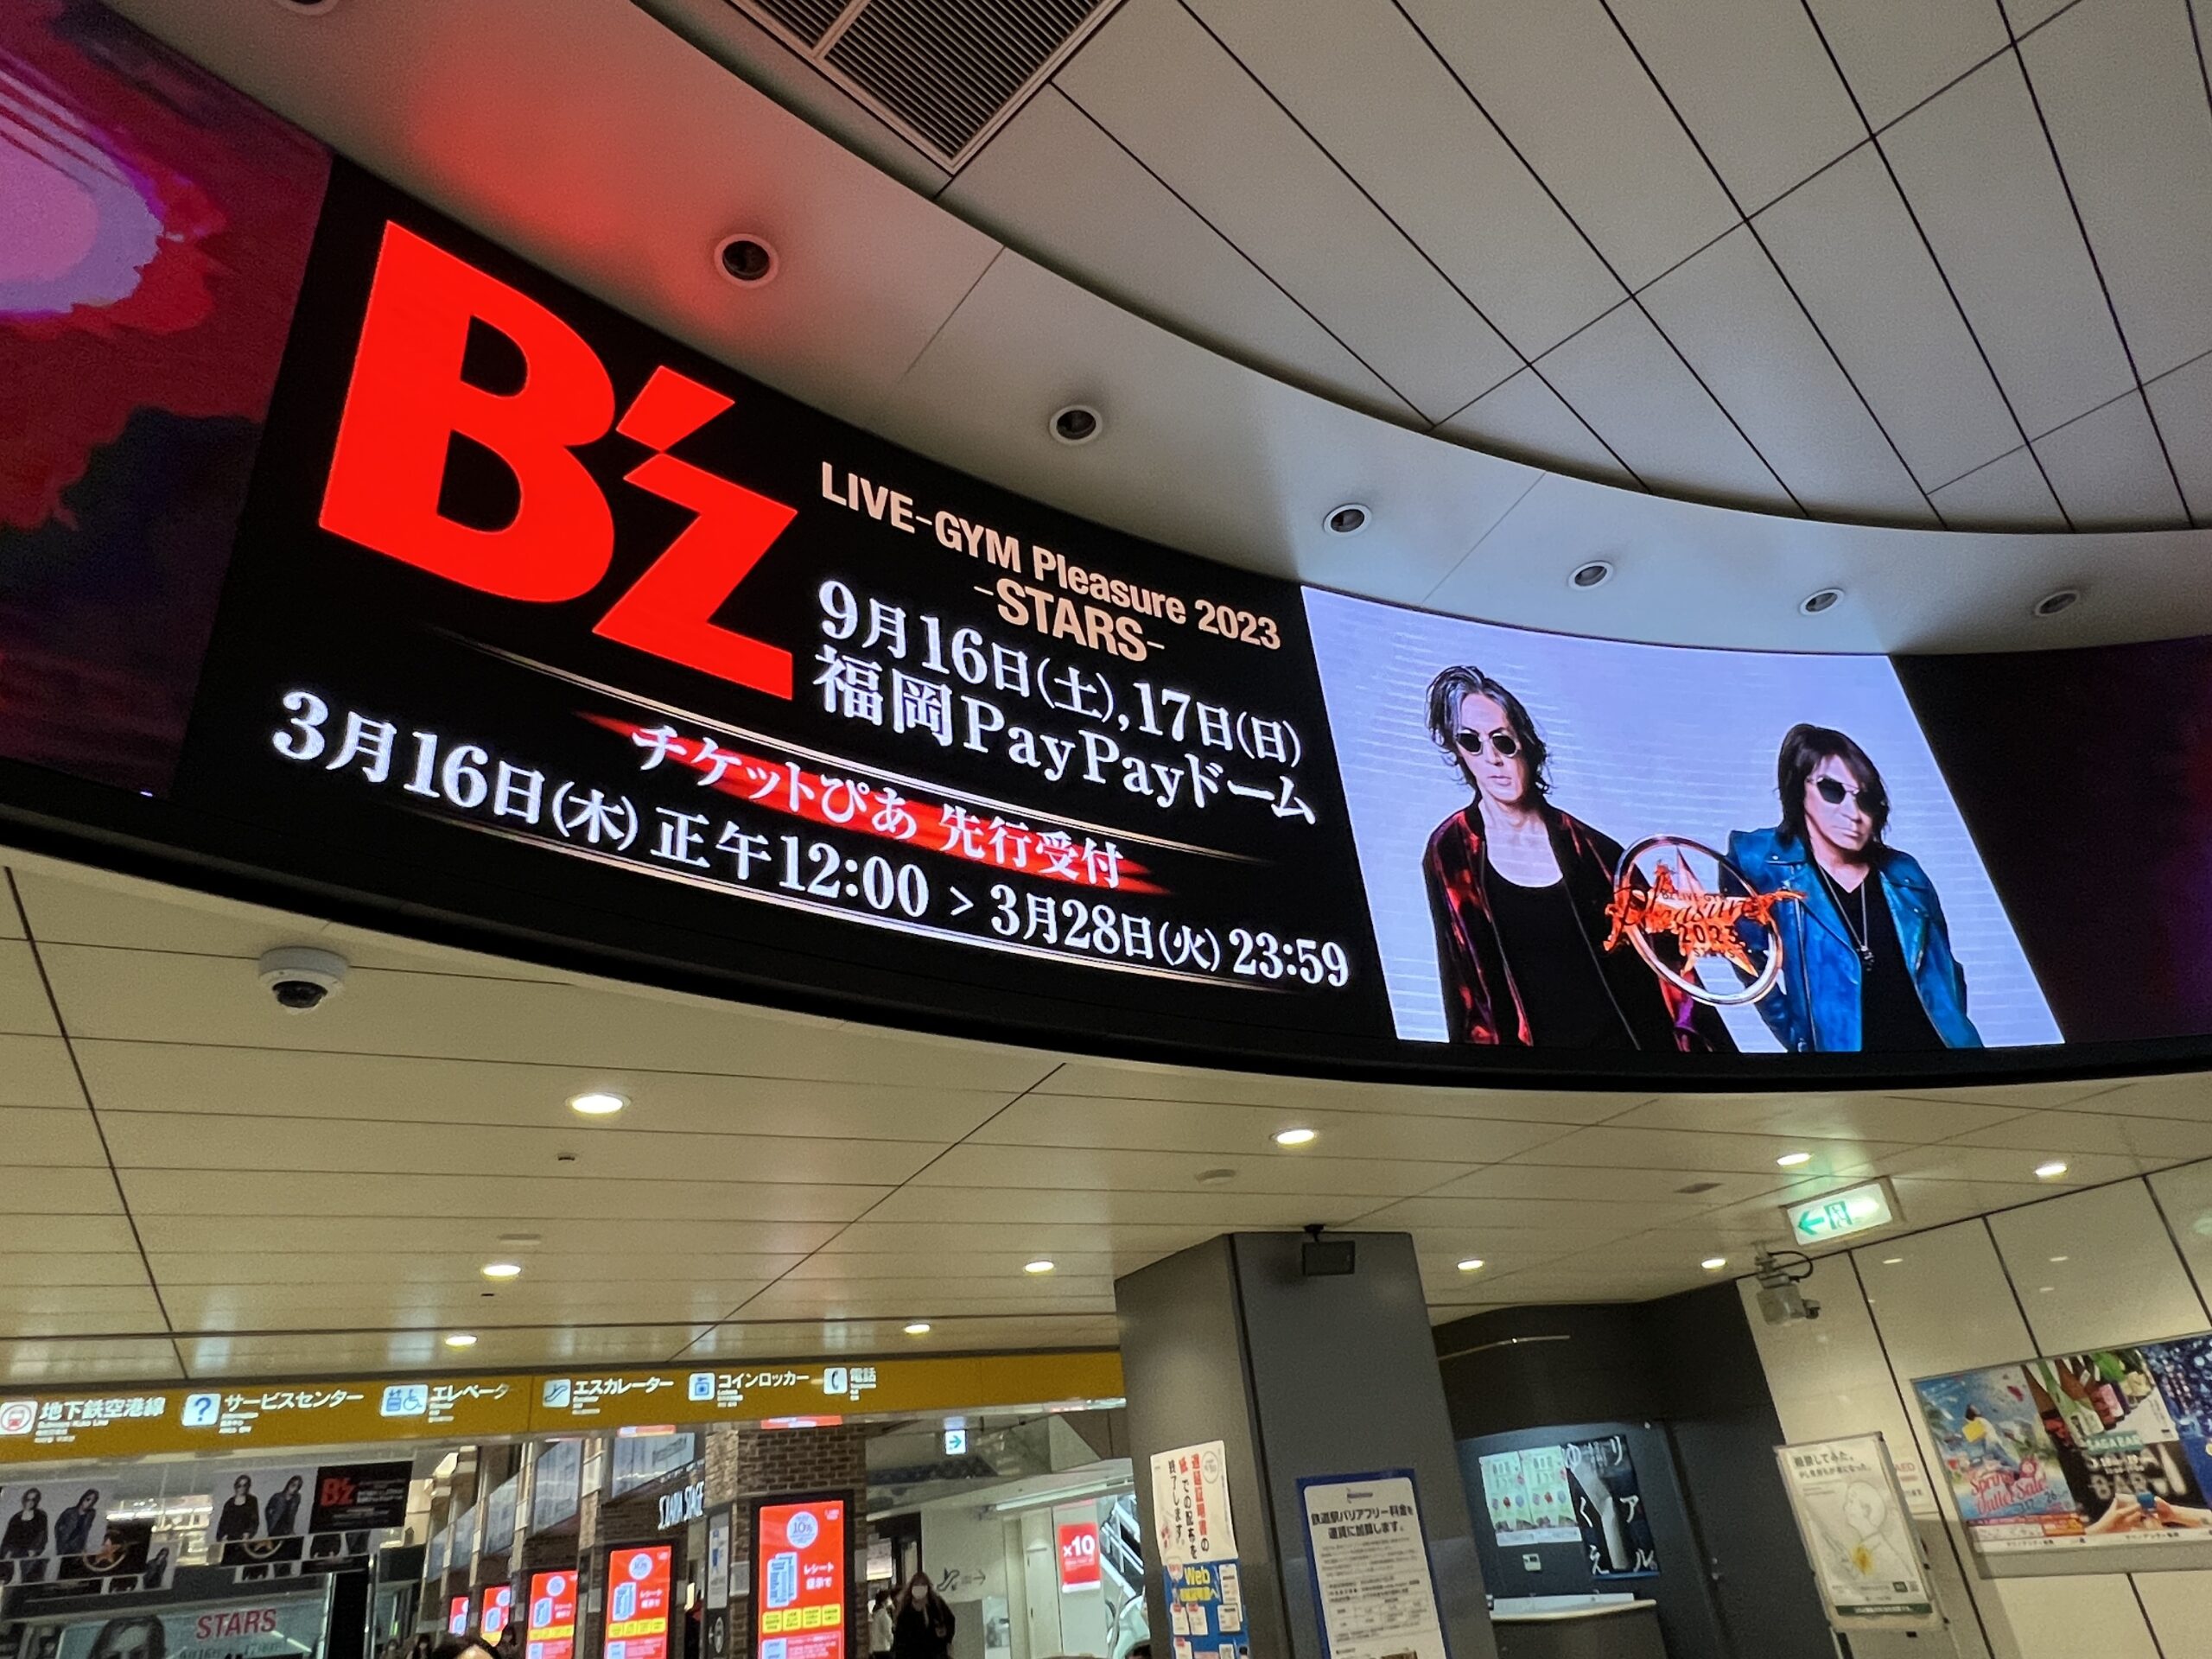 『B'z LIVE-GYM Pleasure 2023 -STARS-』福岡公演の告知サイネージ広告